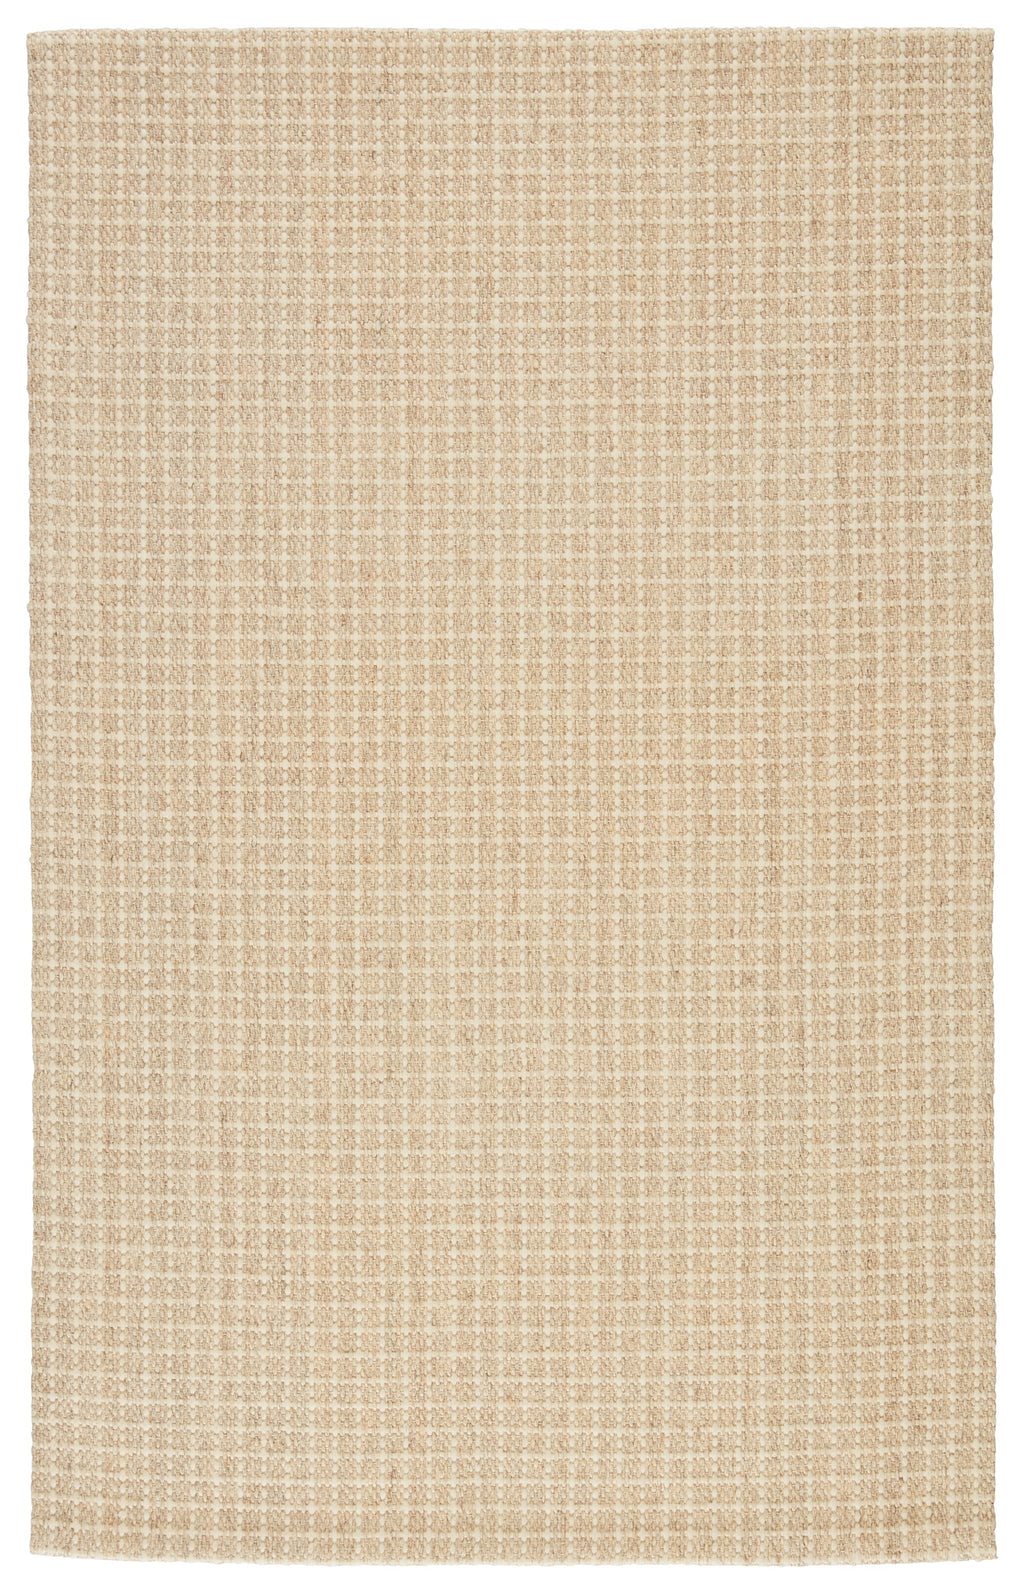 tane handmade solid beige ivory rug by jaipur living 1